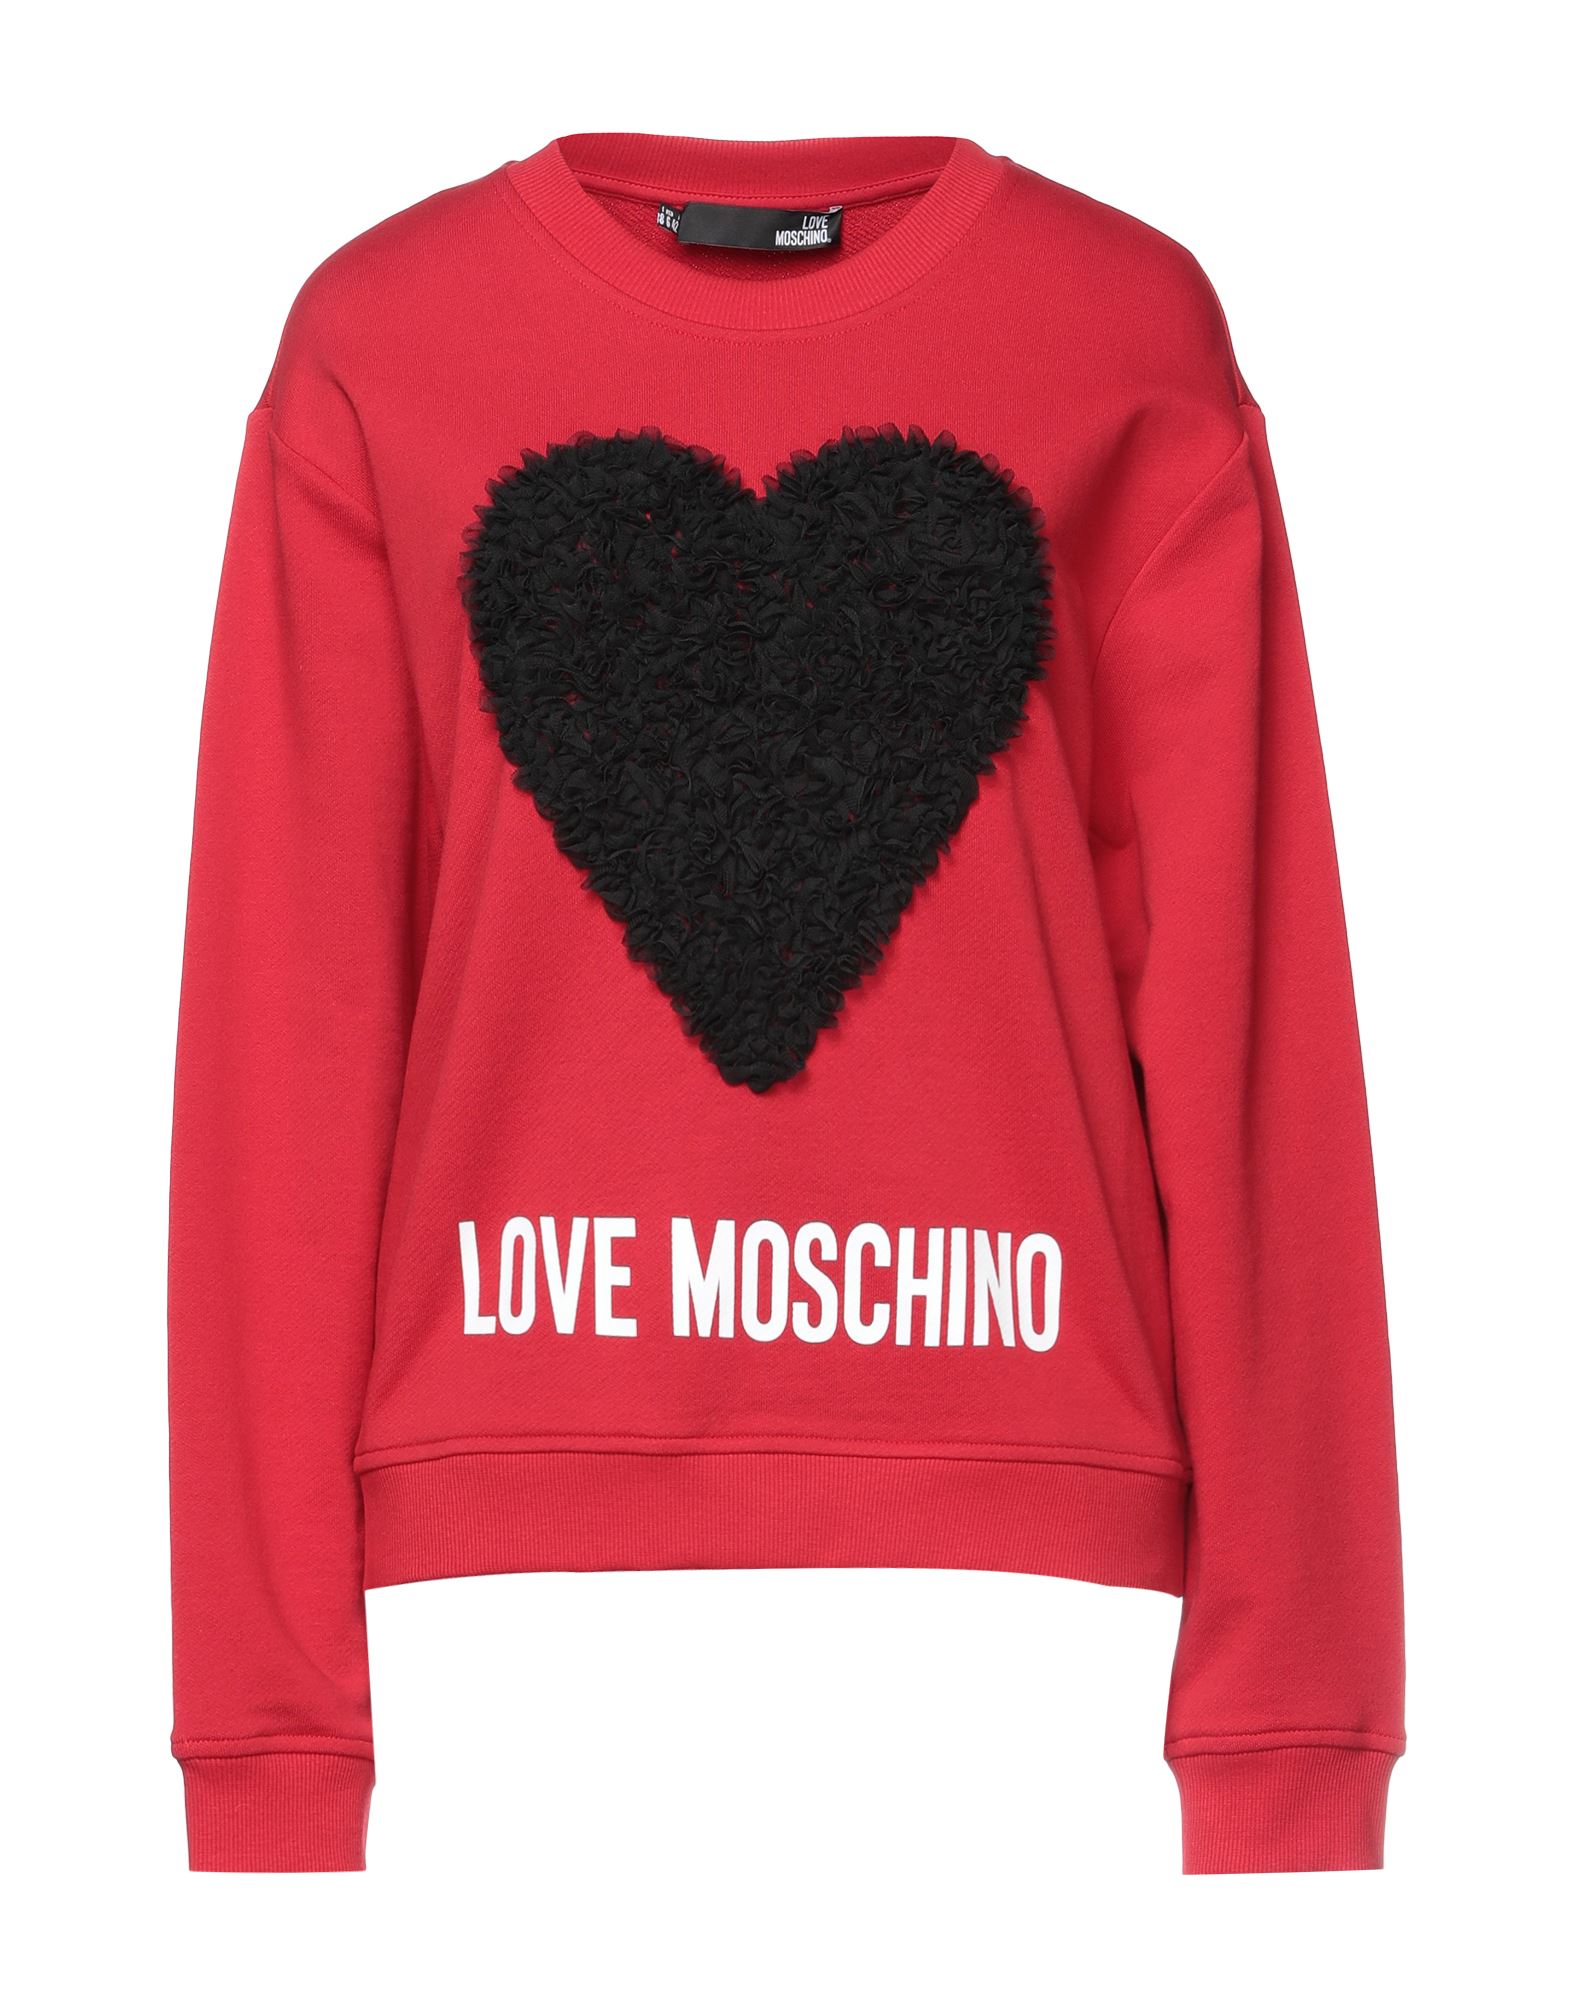 Москино одежда. Love Moschino. Love Moschino свитер Yes no. Одежда Moschino молния.